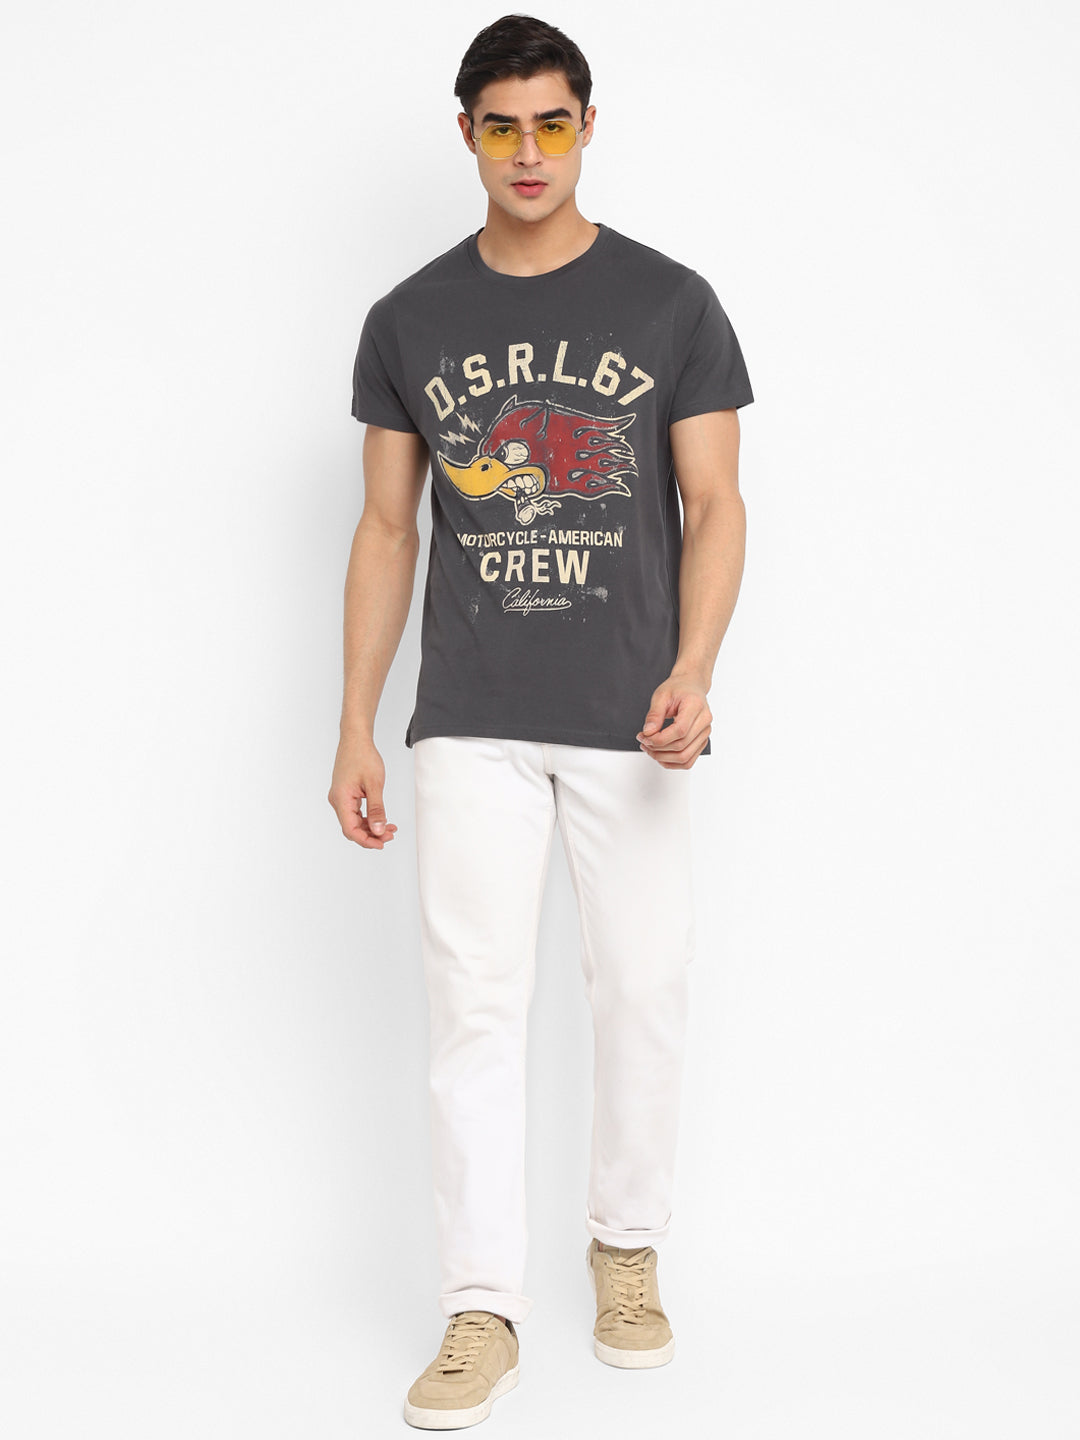 100% Cotton Printed Round Neck T-Shirt for Men - Gargoyle Grey